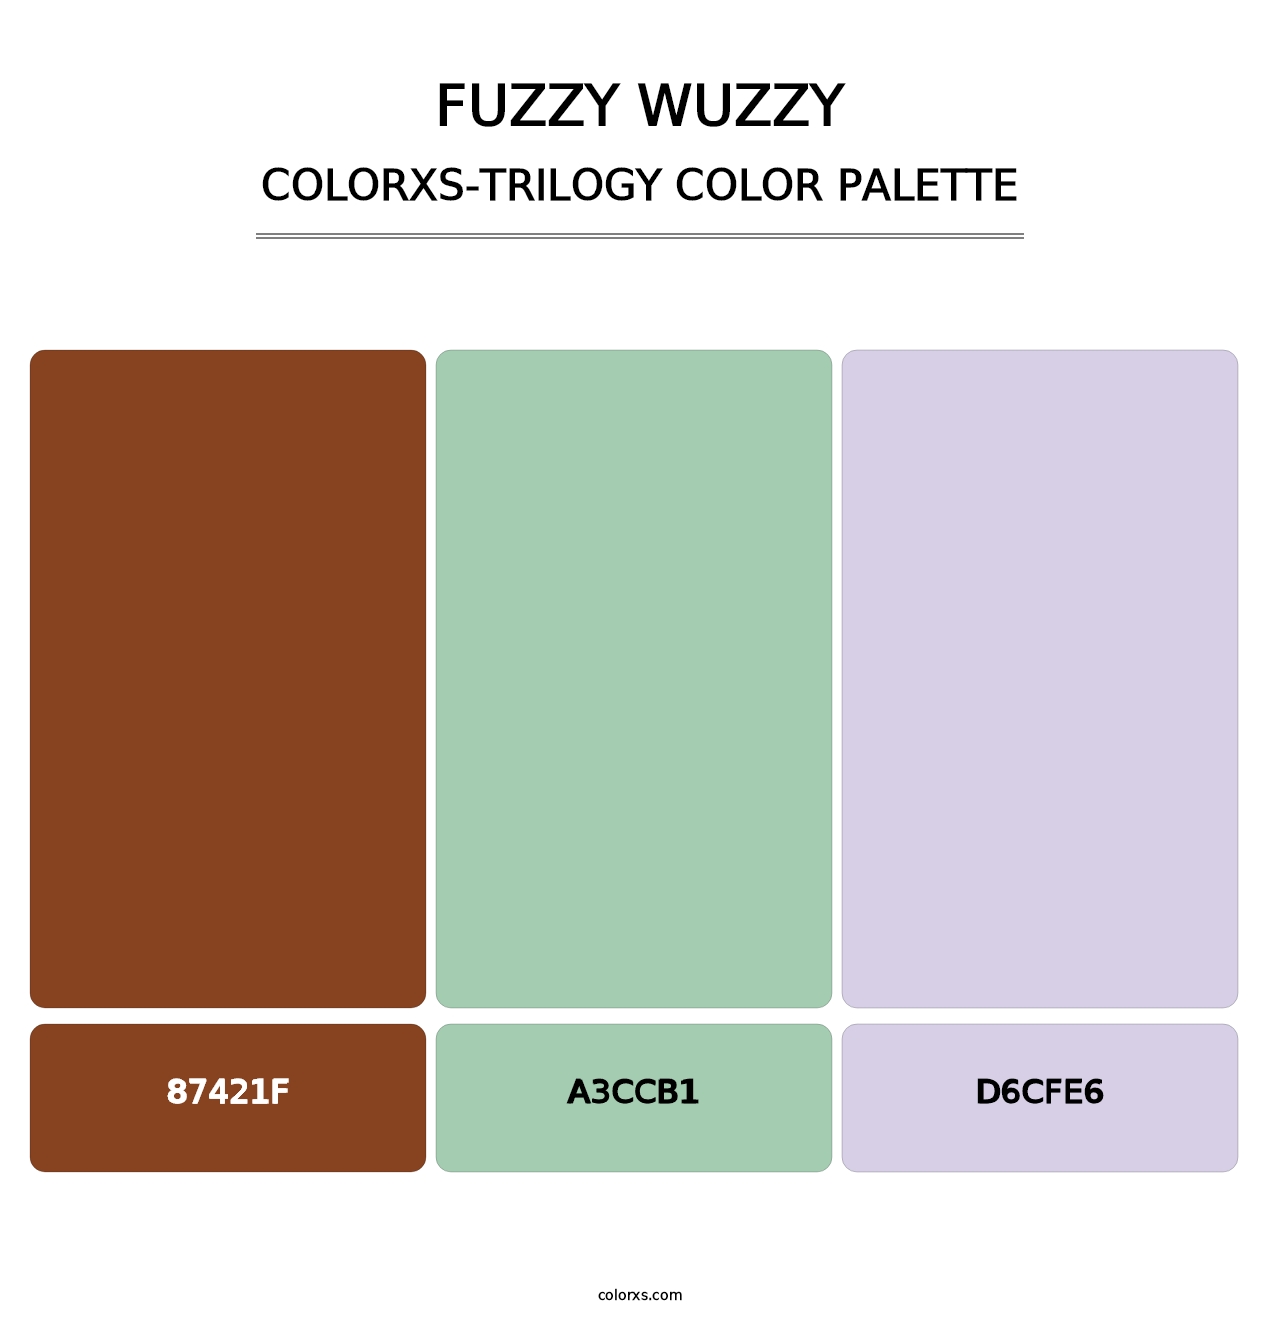 Fuzzy Wuzzy - Colorxs Trilogy Palette